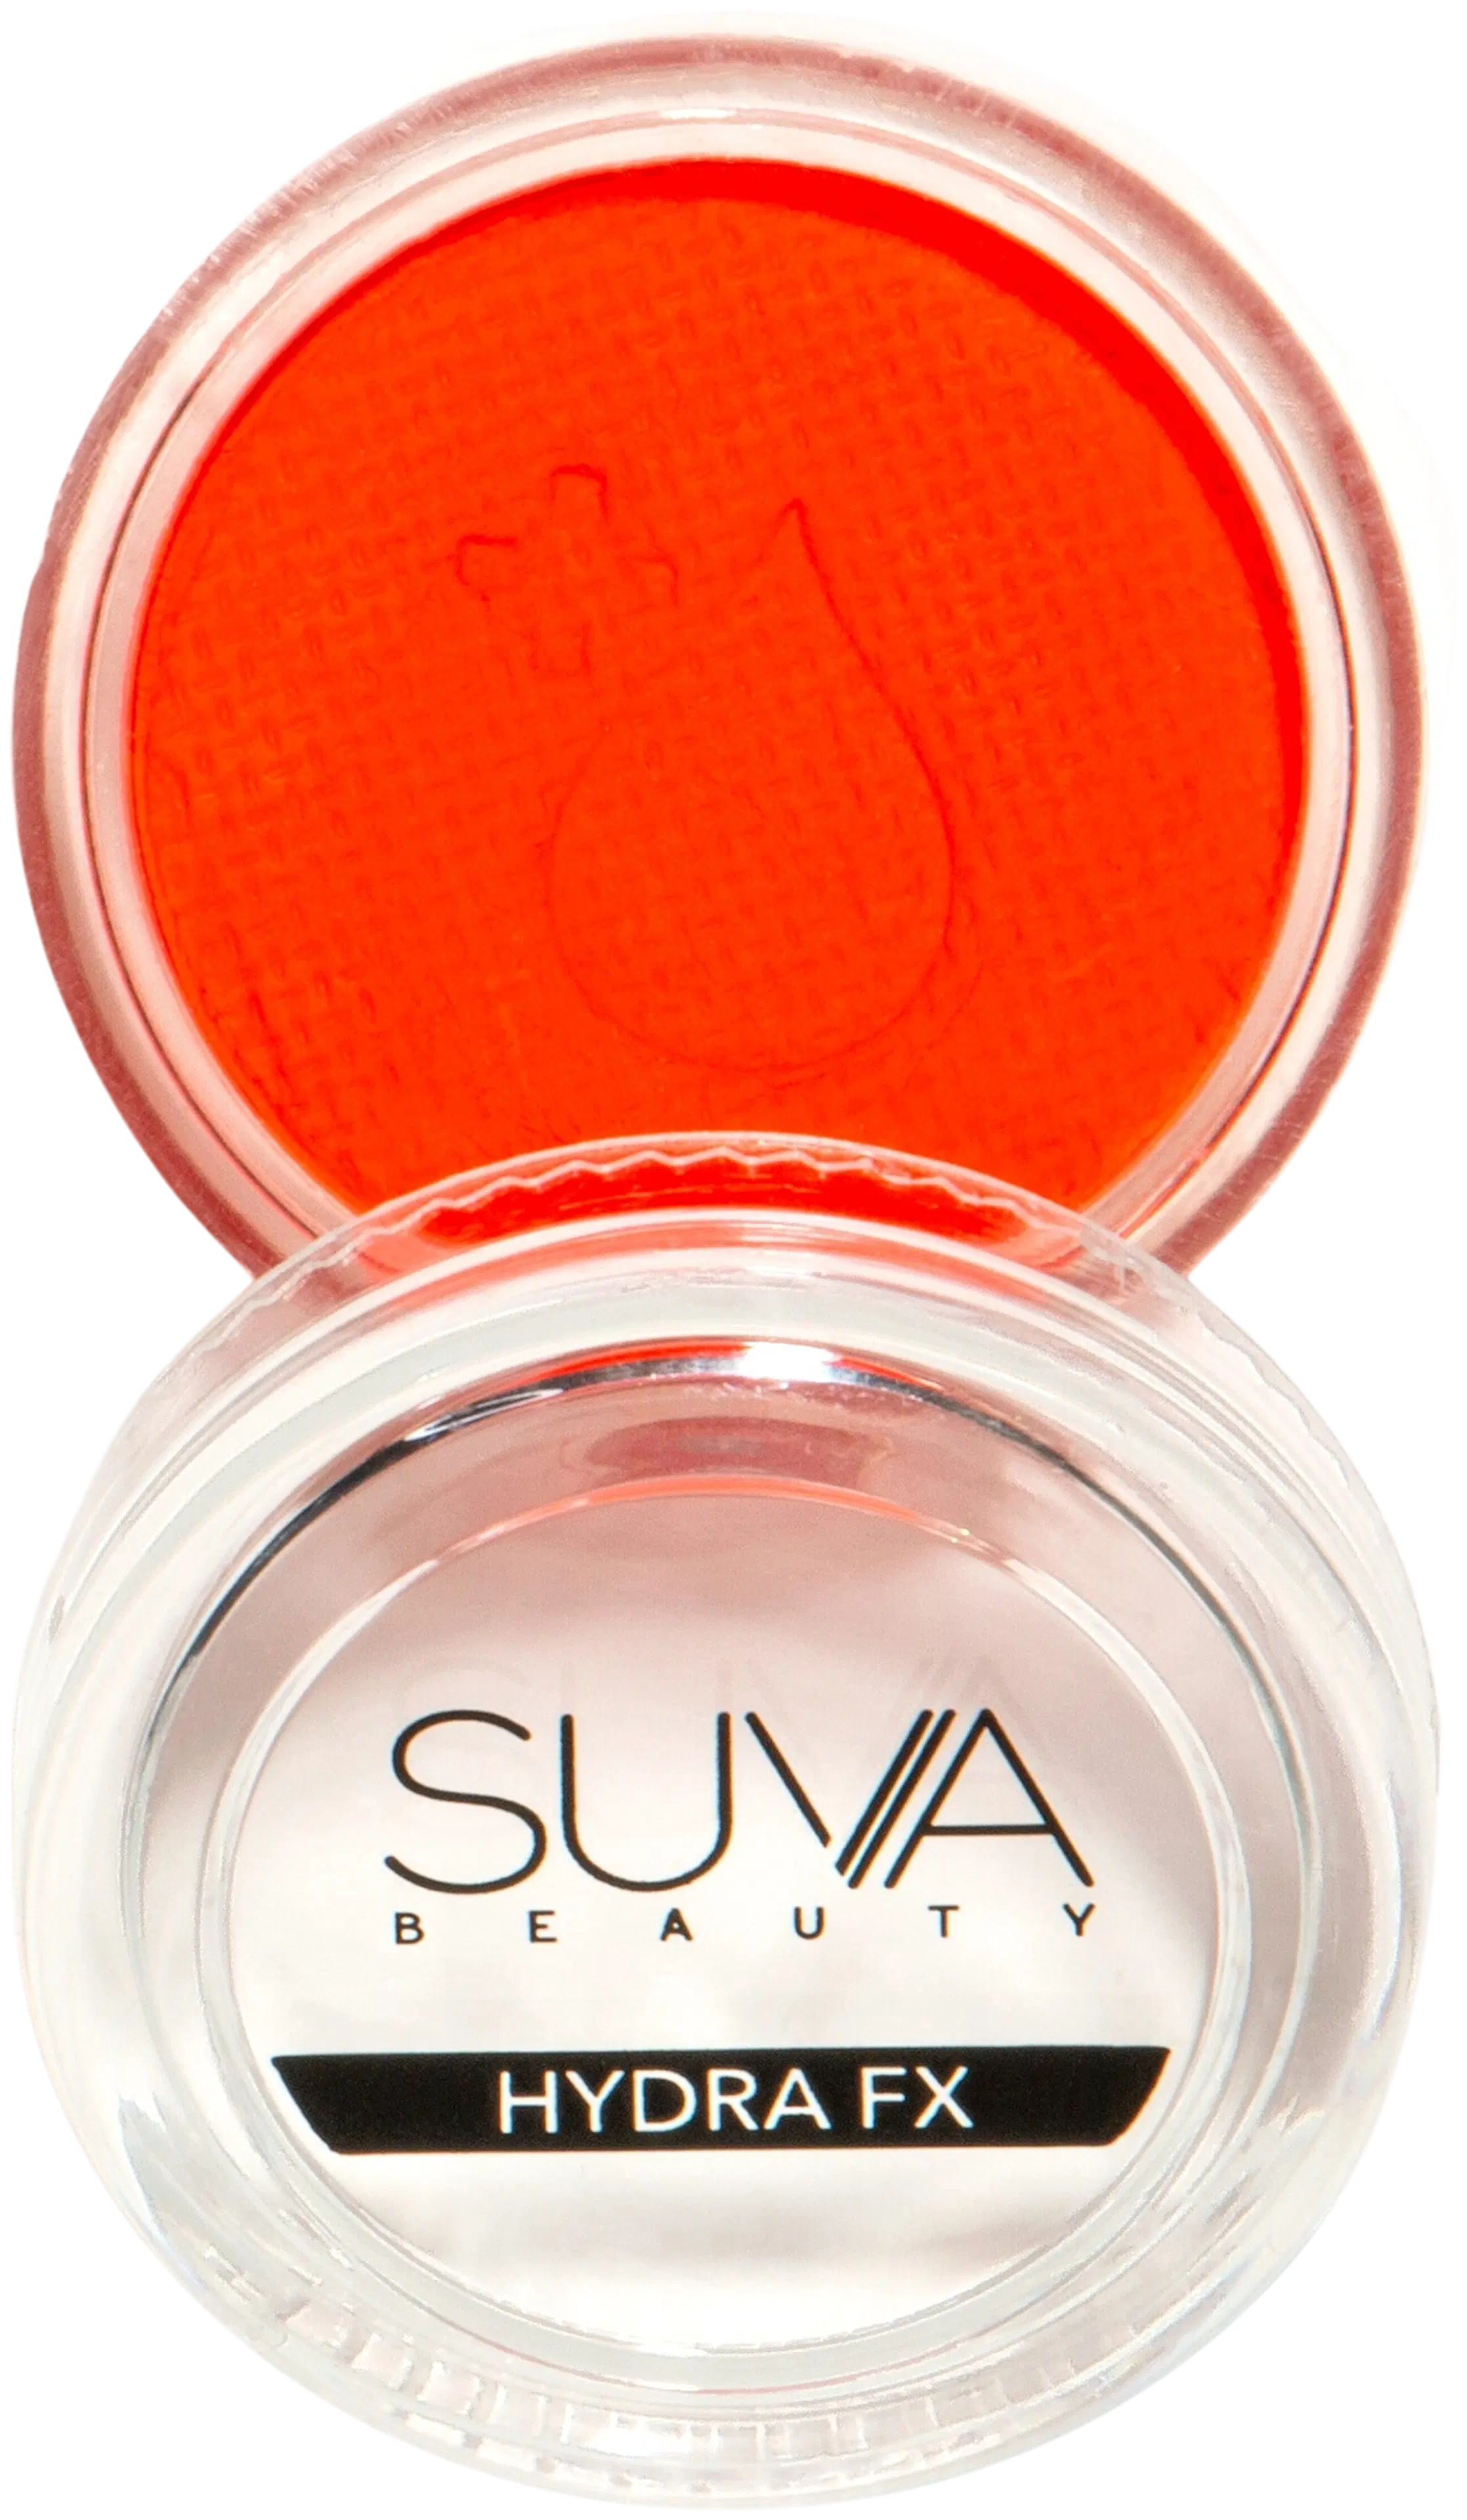 SUVA Beauty Hydra FX Acid Trip (UV) vedellä aktivoituva rajausväri